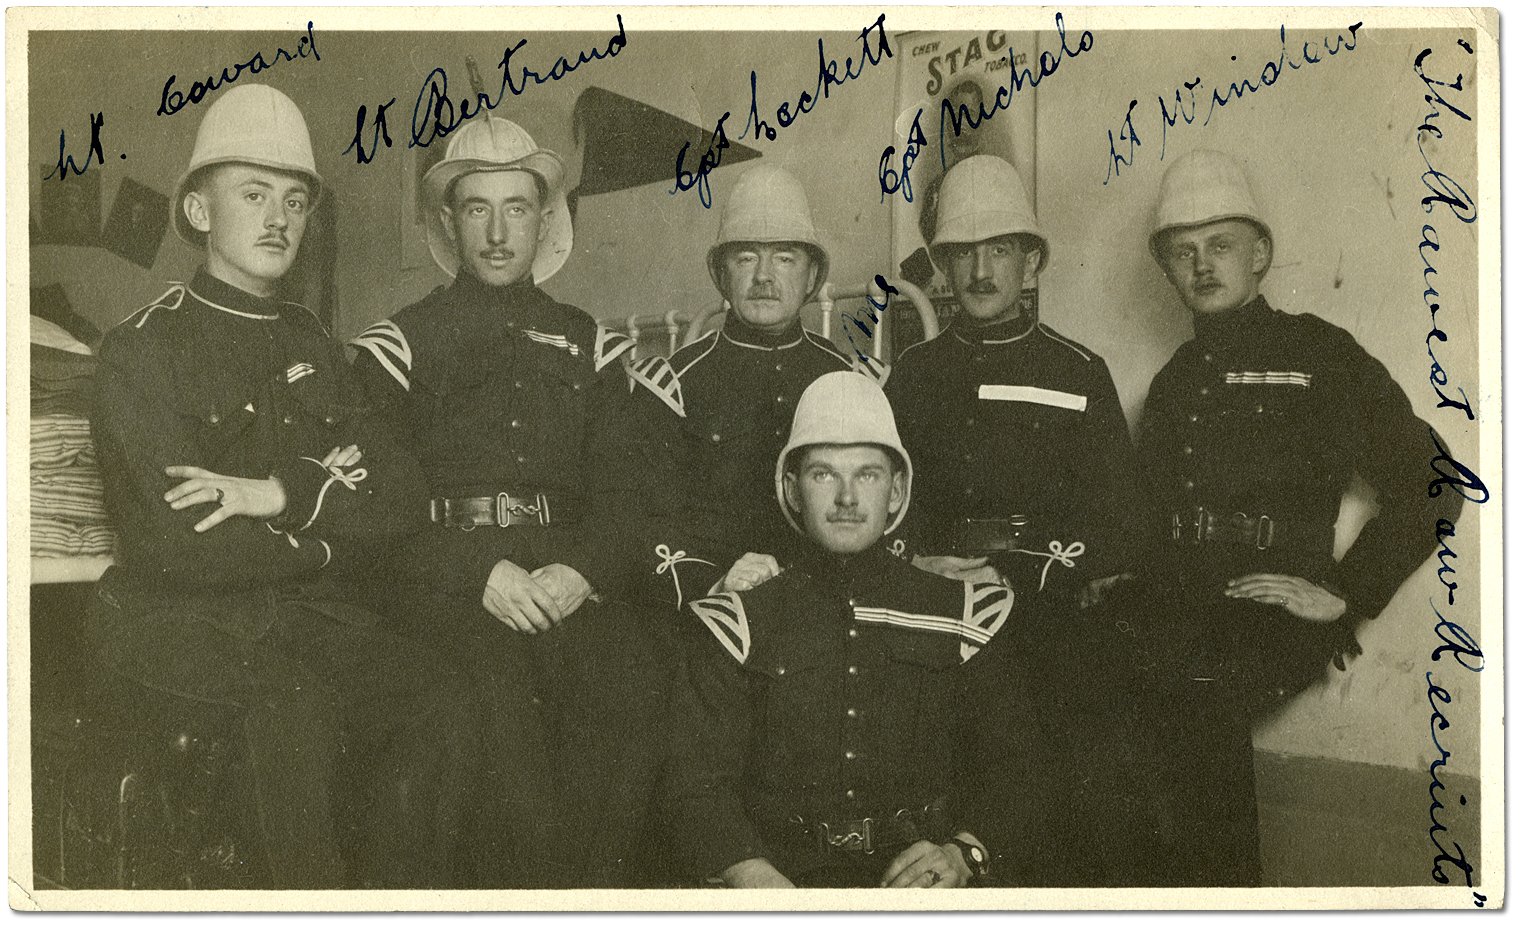 “The rawest raw recruits,” from left to right: Lieutenant Coward, Lieutenant Bertrand, Captain Lockett, Lieutenant Harry Mason, Captain Nichols, and Lieutenant Winslow, [ca. 1914-1917]